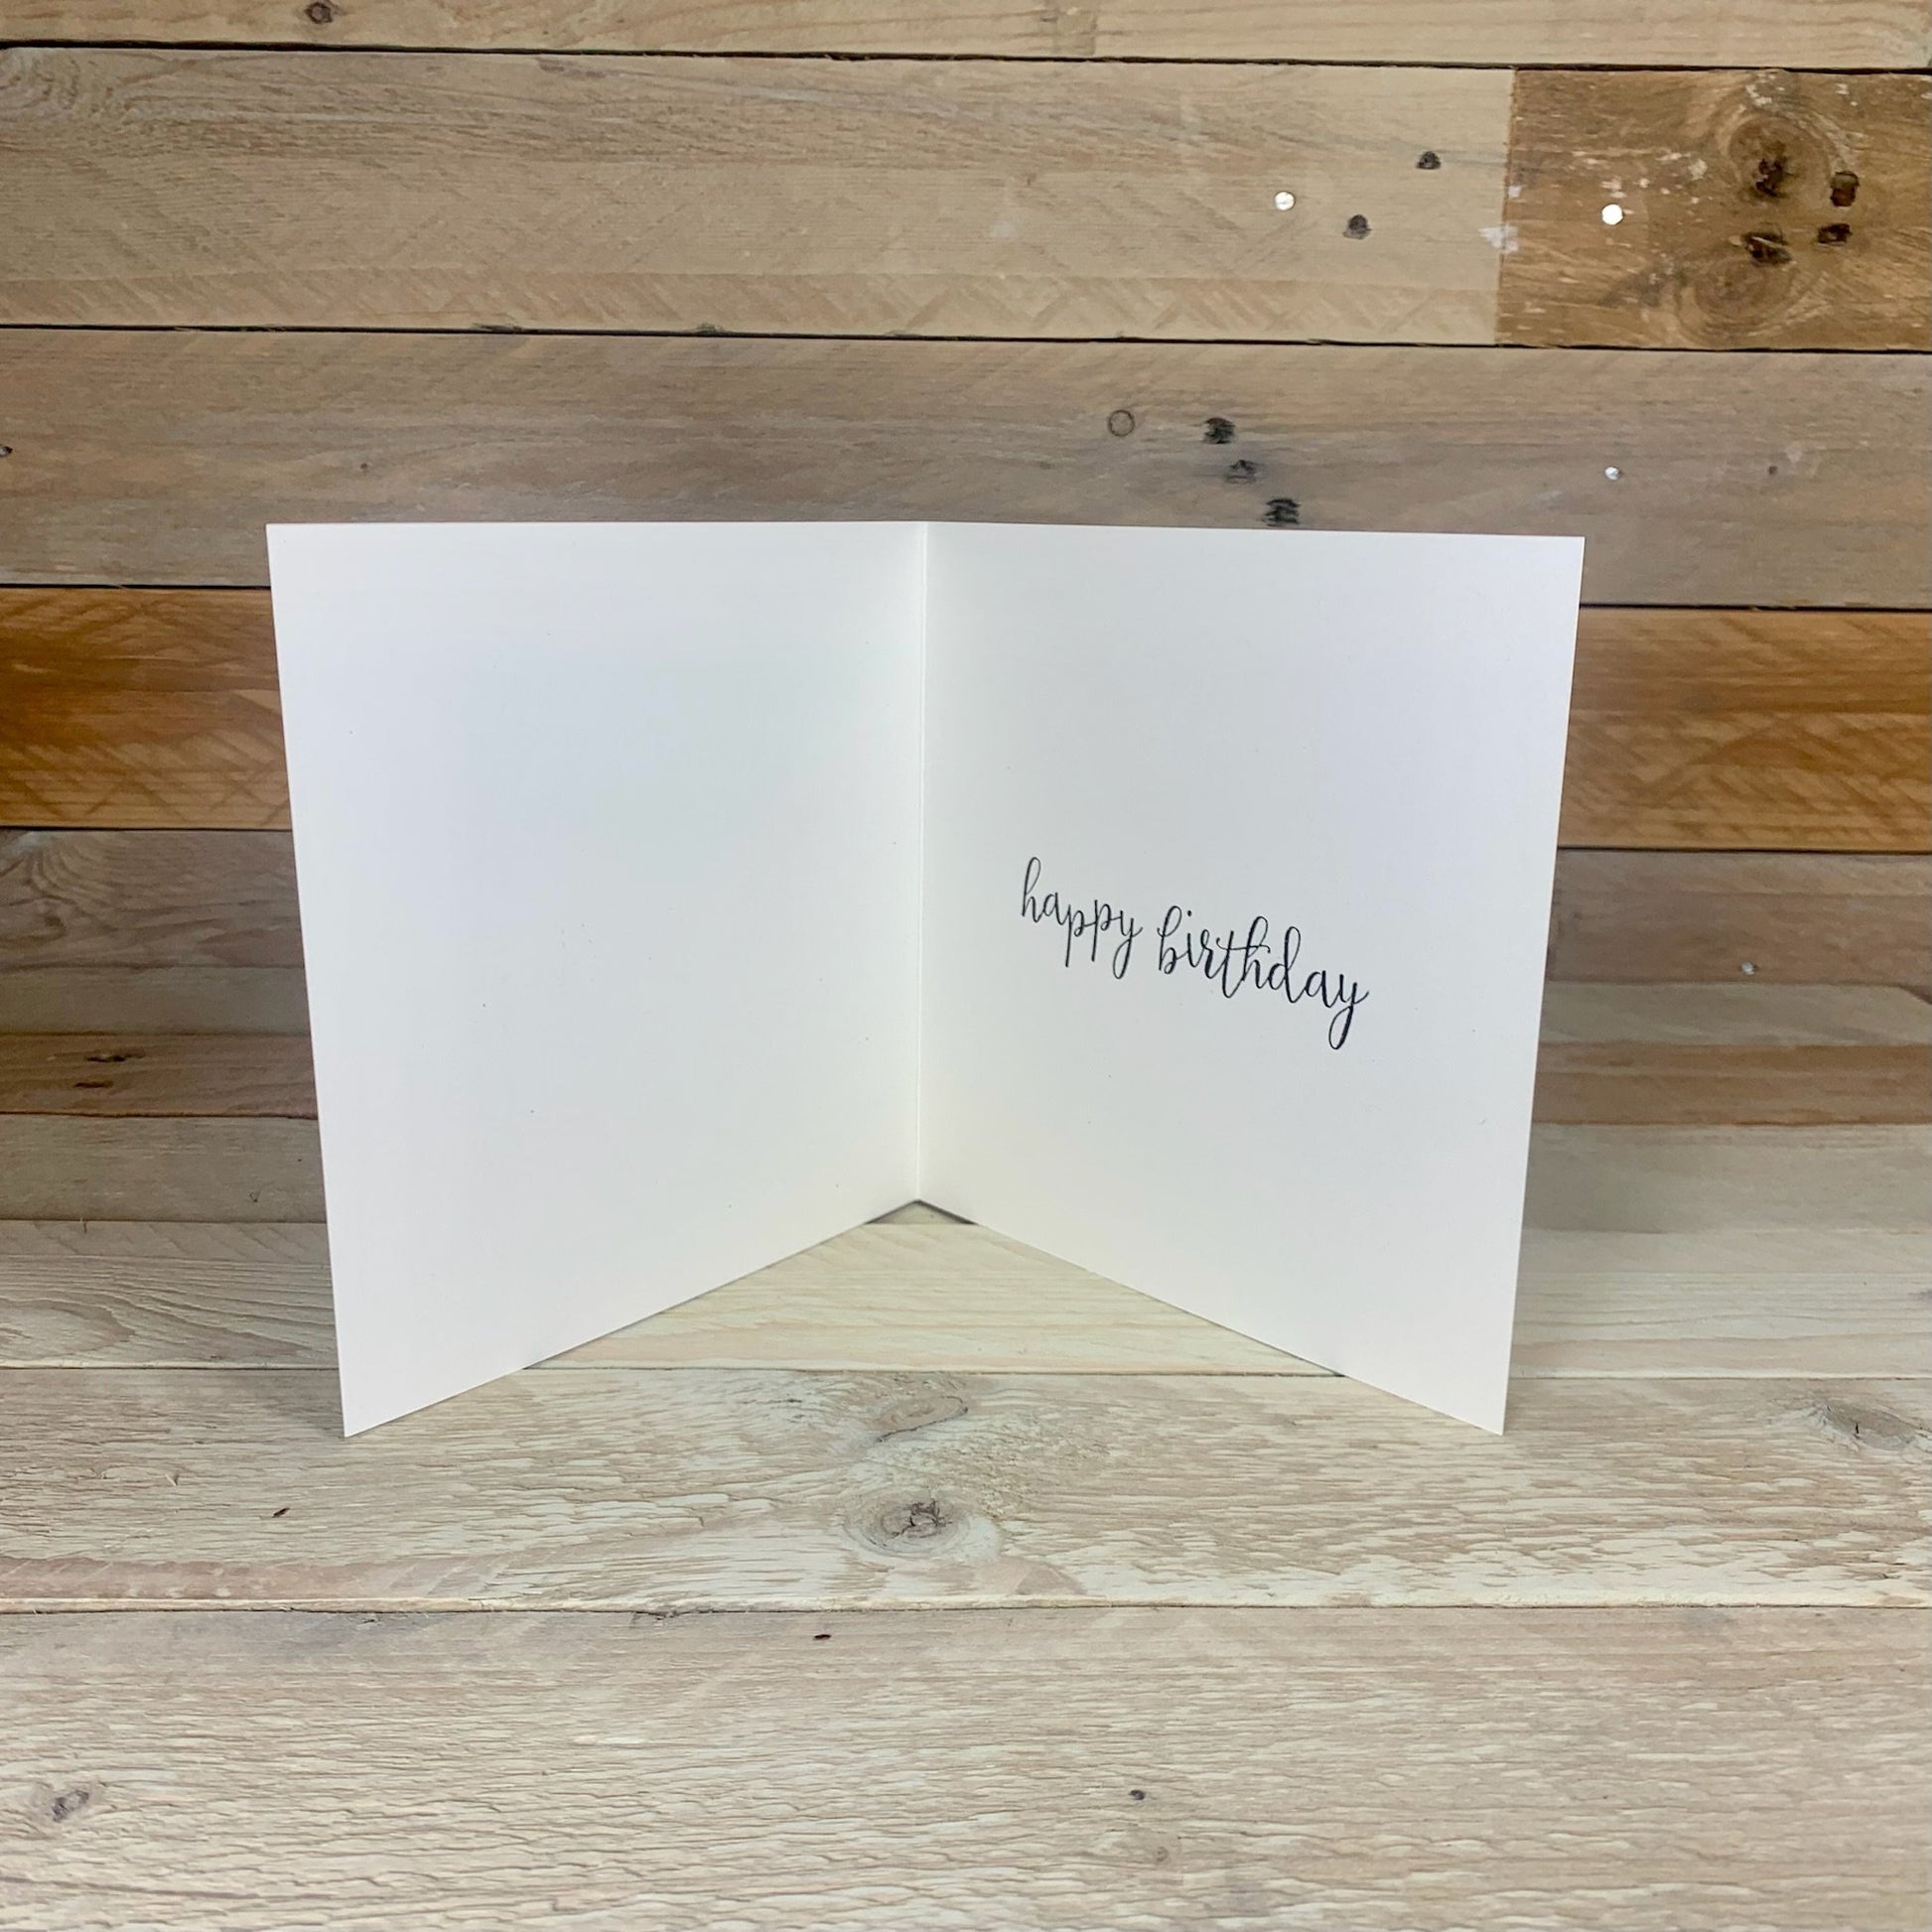 Phelix the Pheasant Birthday Card - Arty Bee Designs 